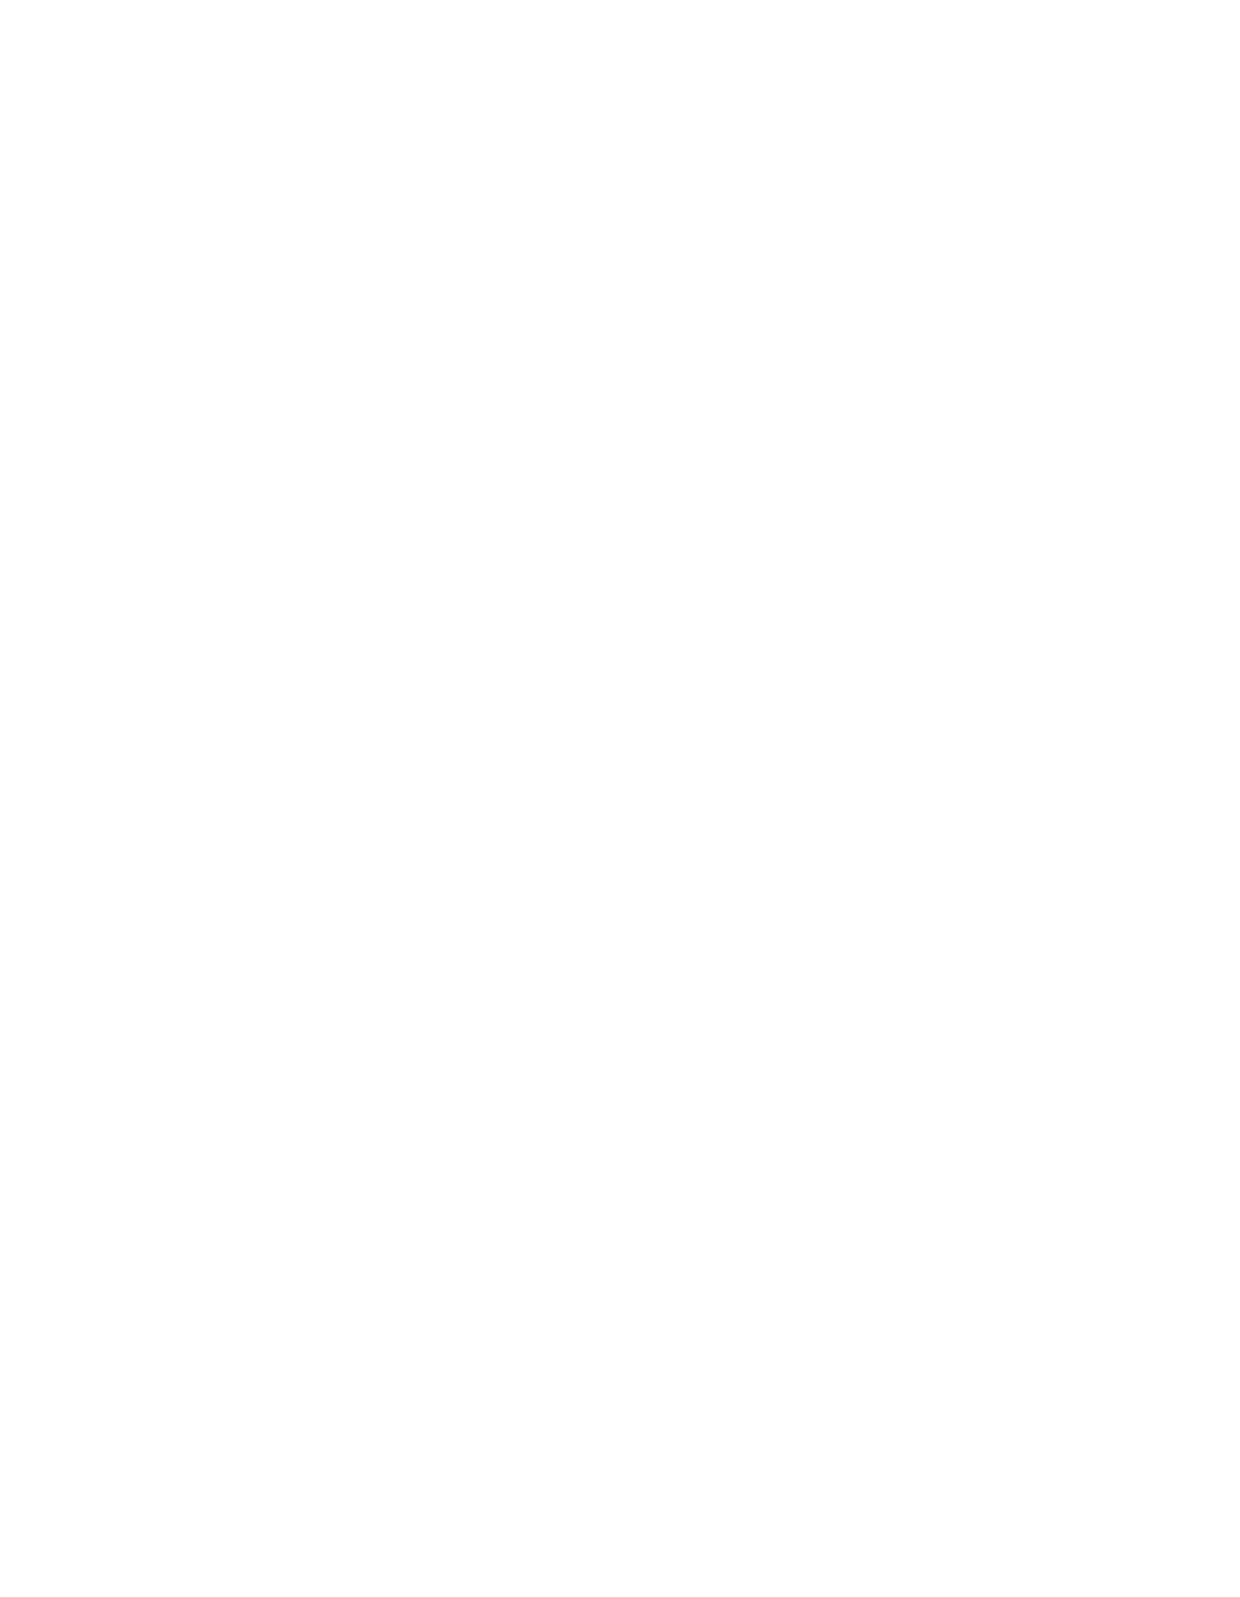 Quilter logo for dark backgrounds (transparent PNG)